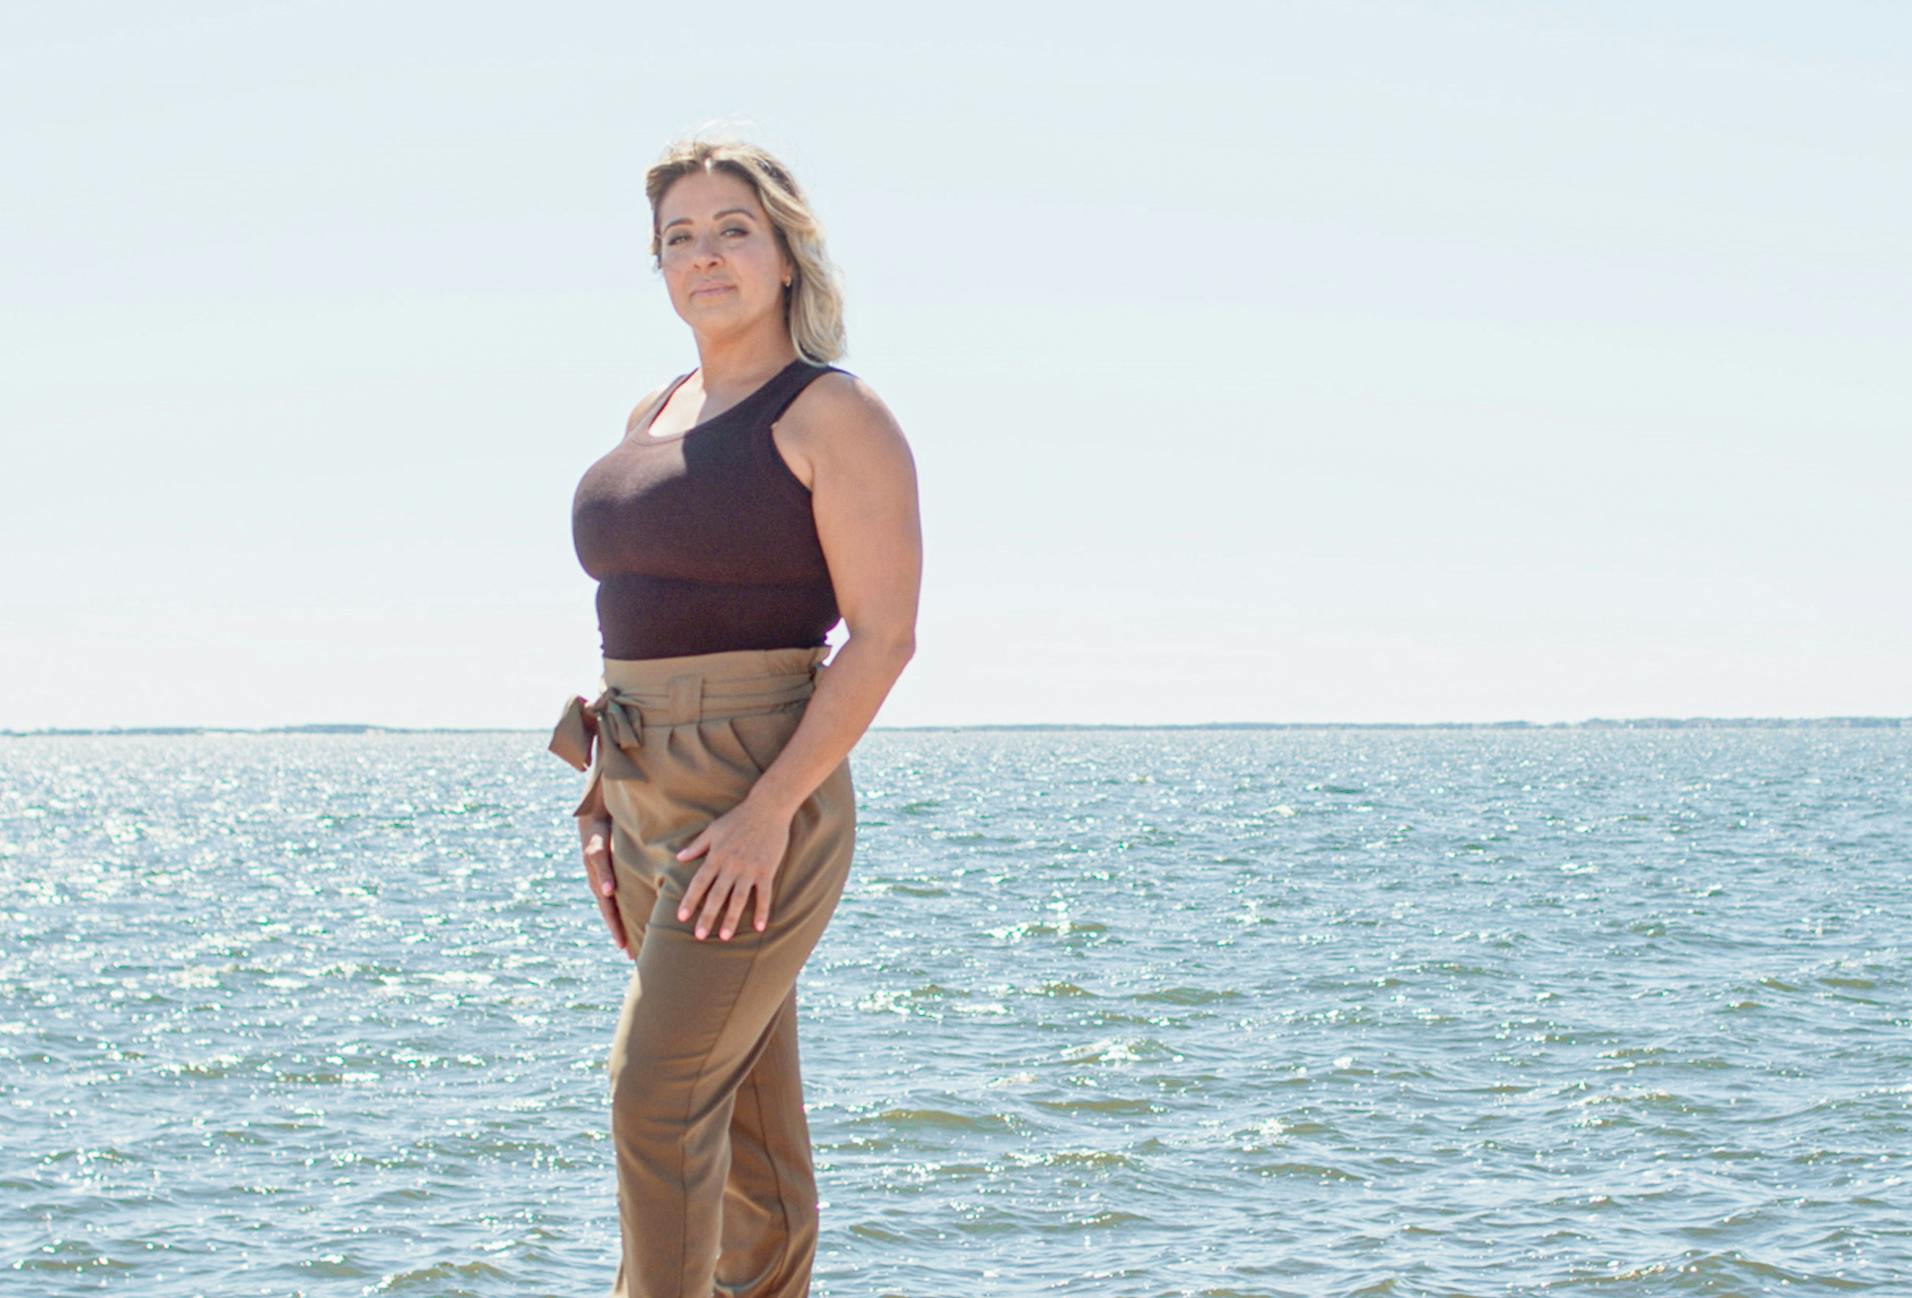 Woman standing by ocean in brown top and pants